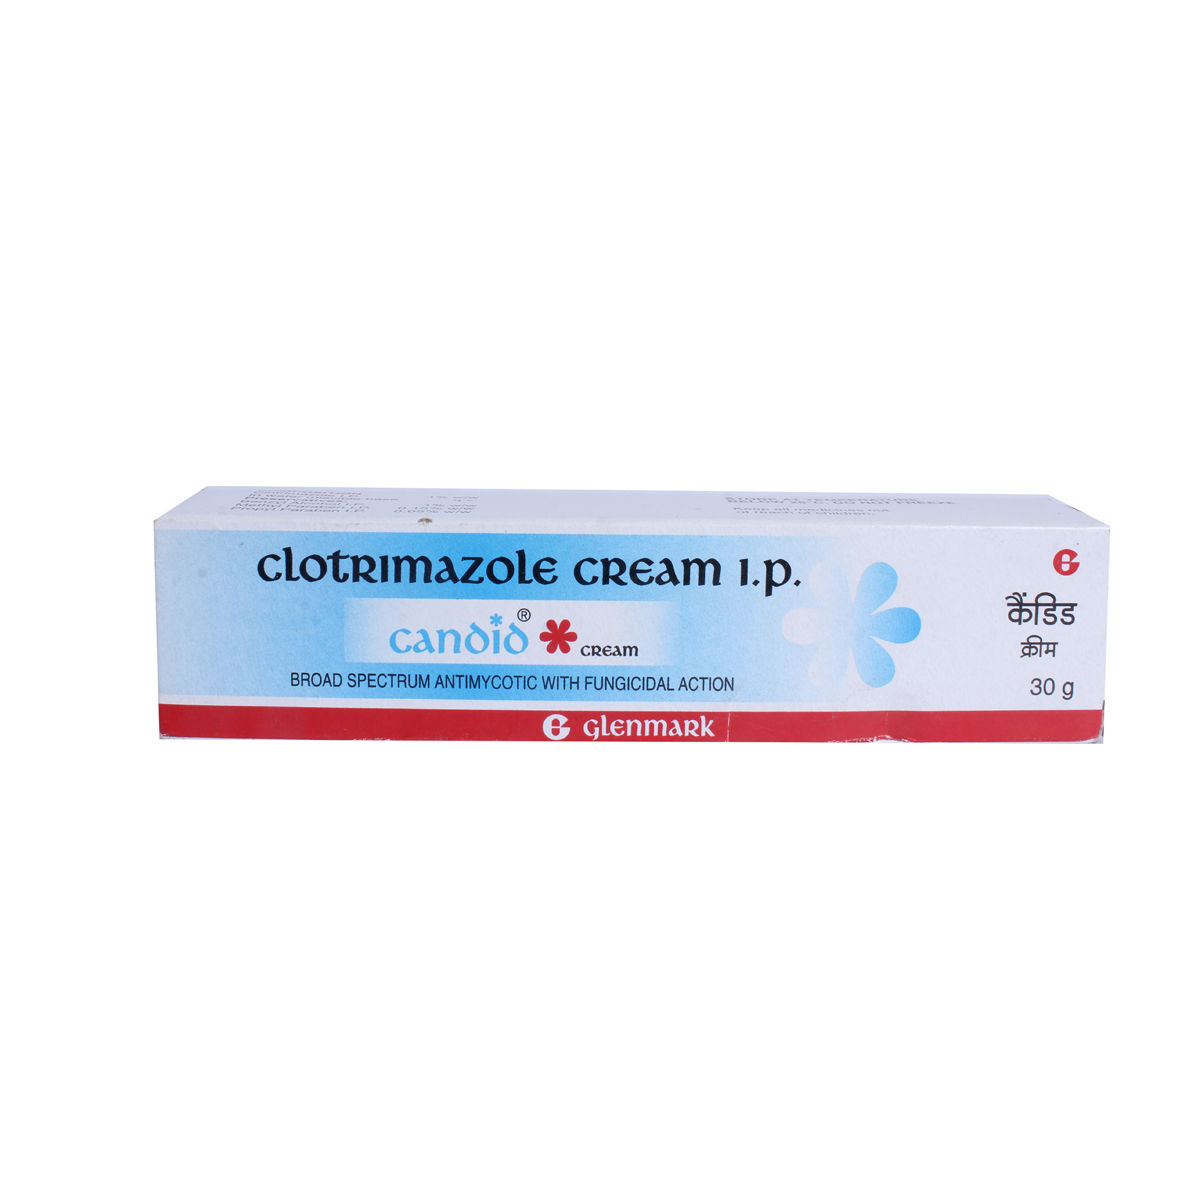 Buy Candid Cream 30 gm Online